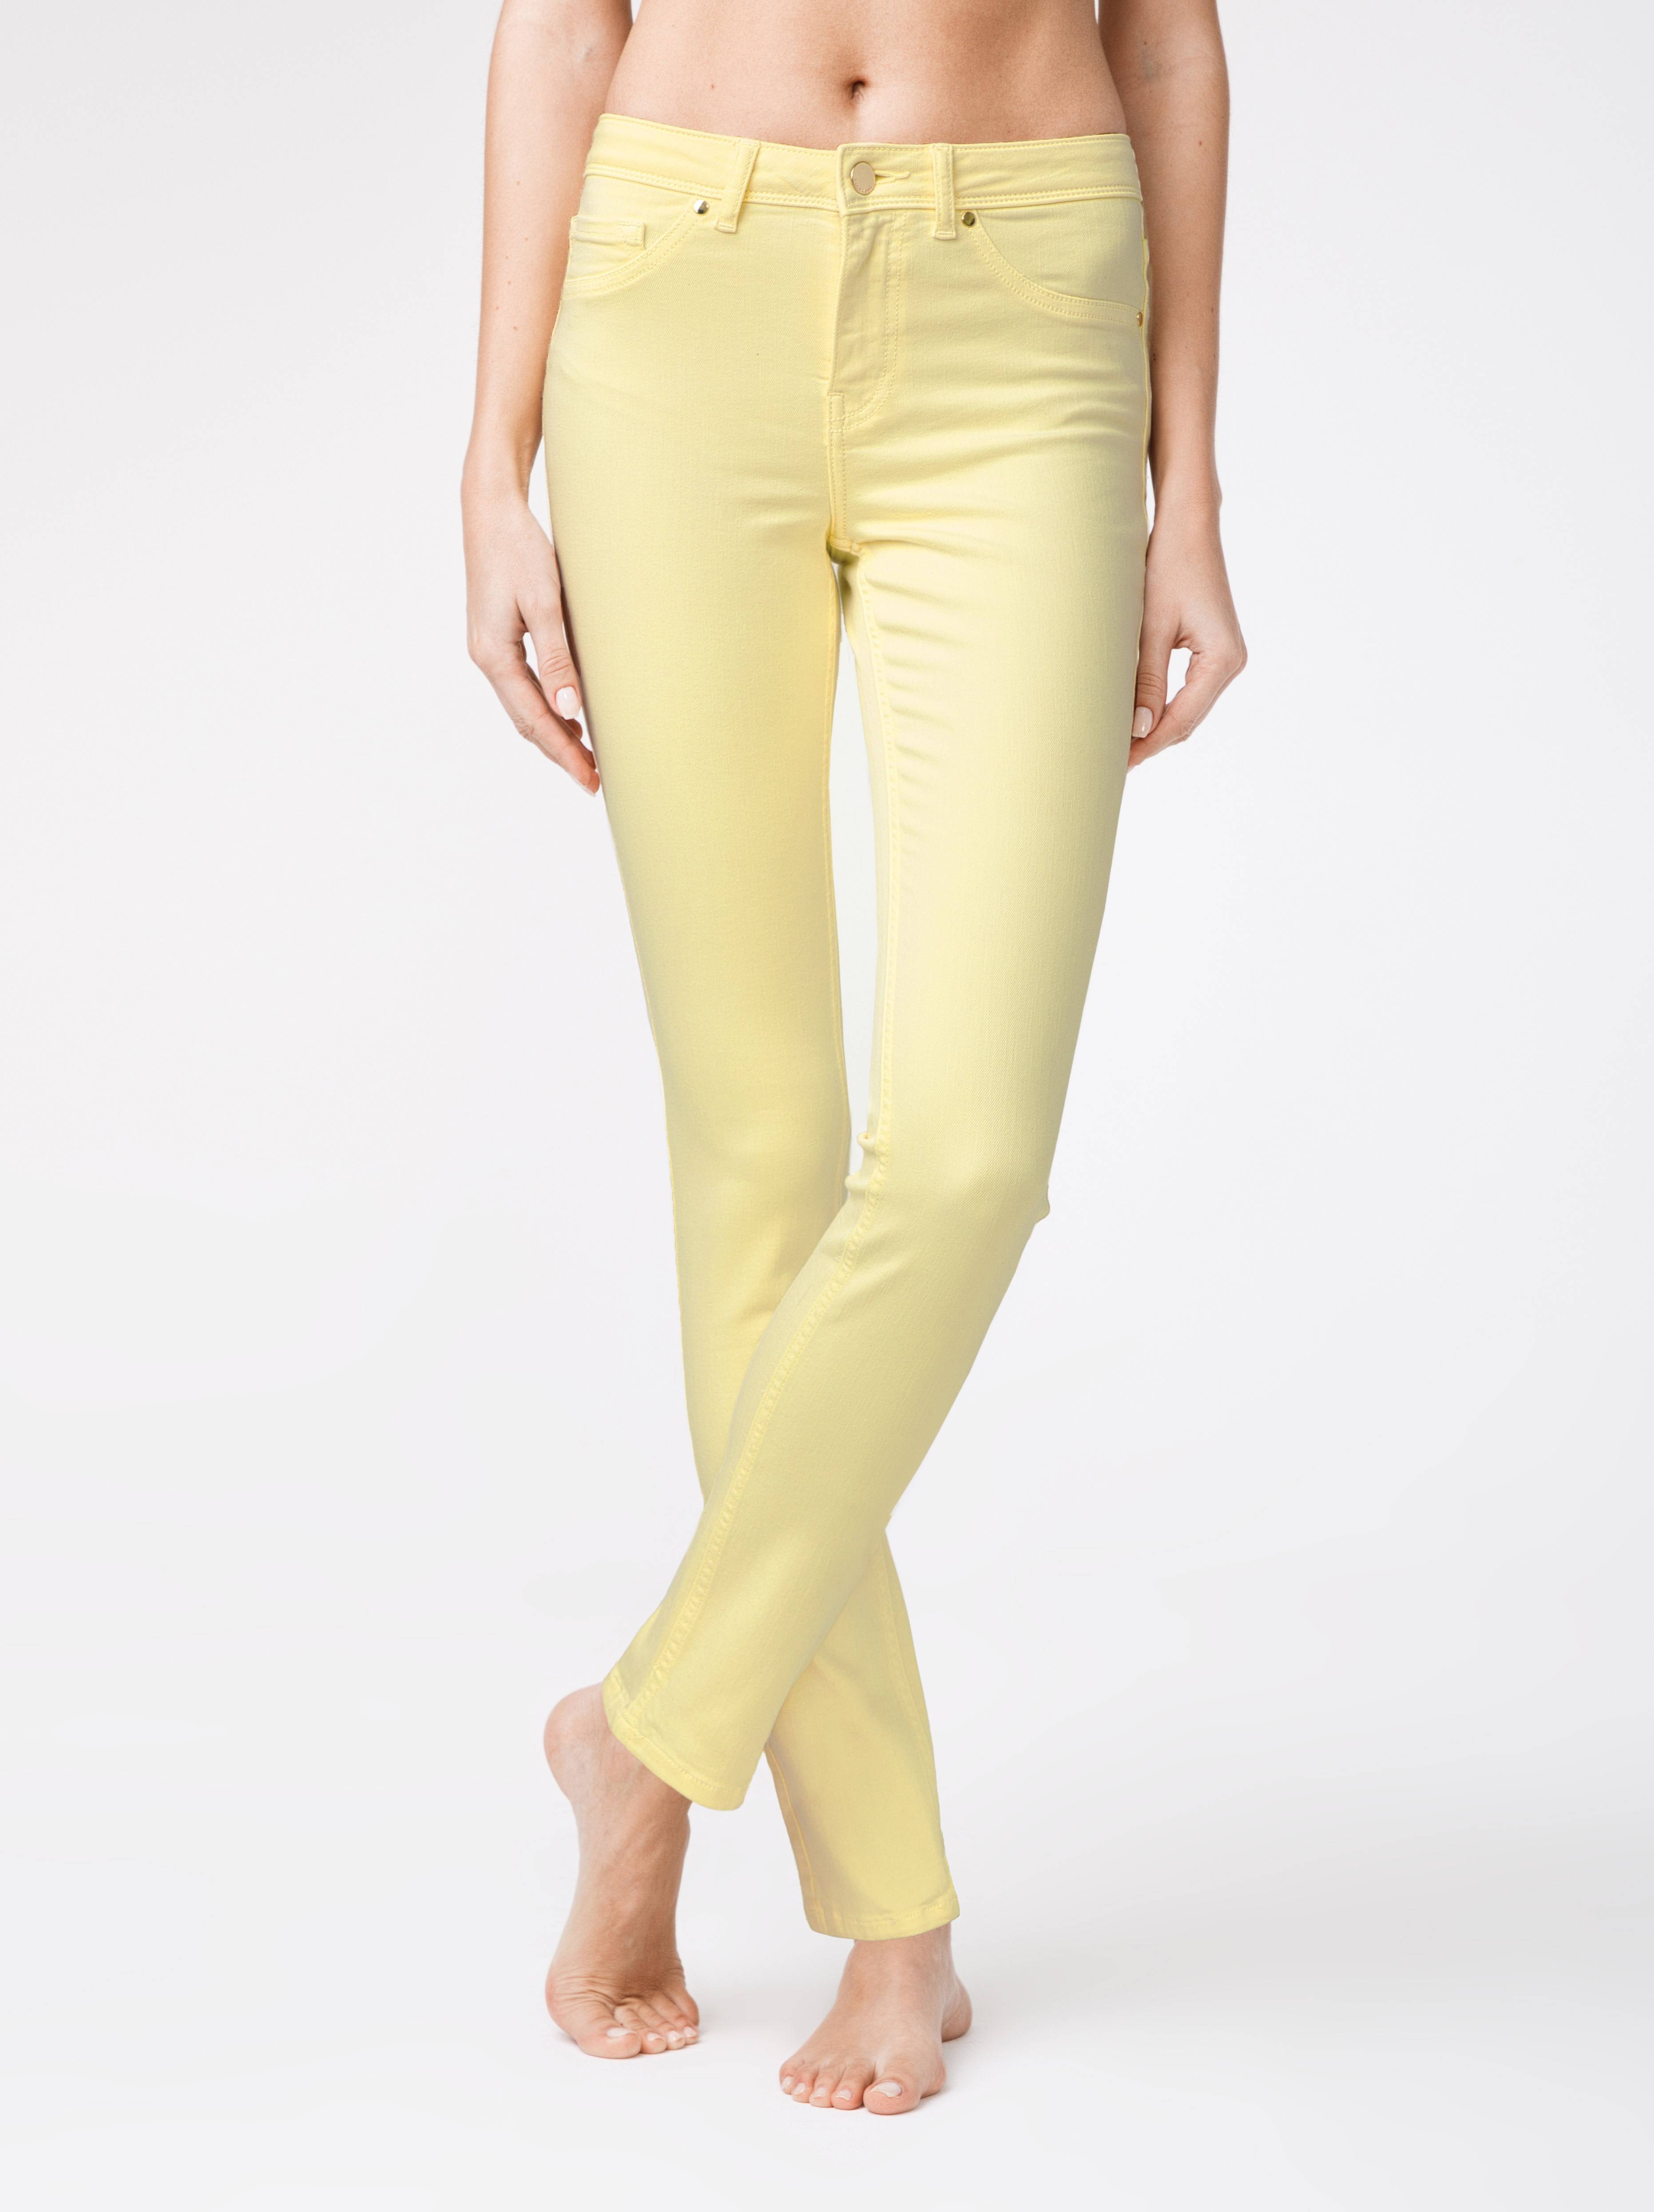 Моделирующие Soft Touch джинсы CON-38Y Conte ⭐️, цвет pastel yellow, размер 164-102 - фото 1